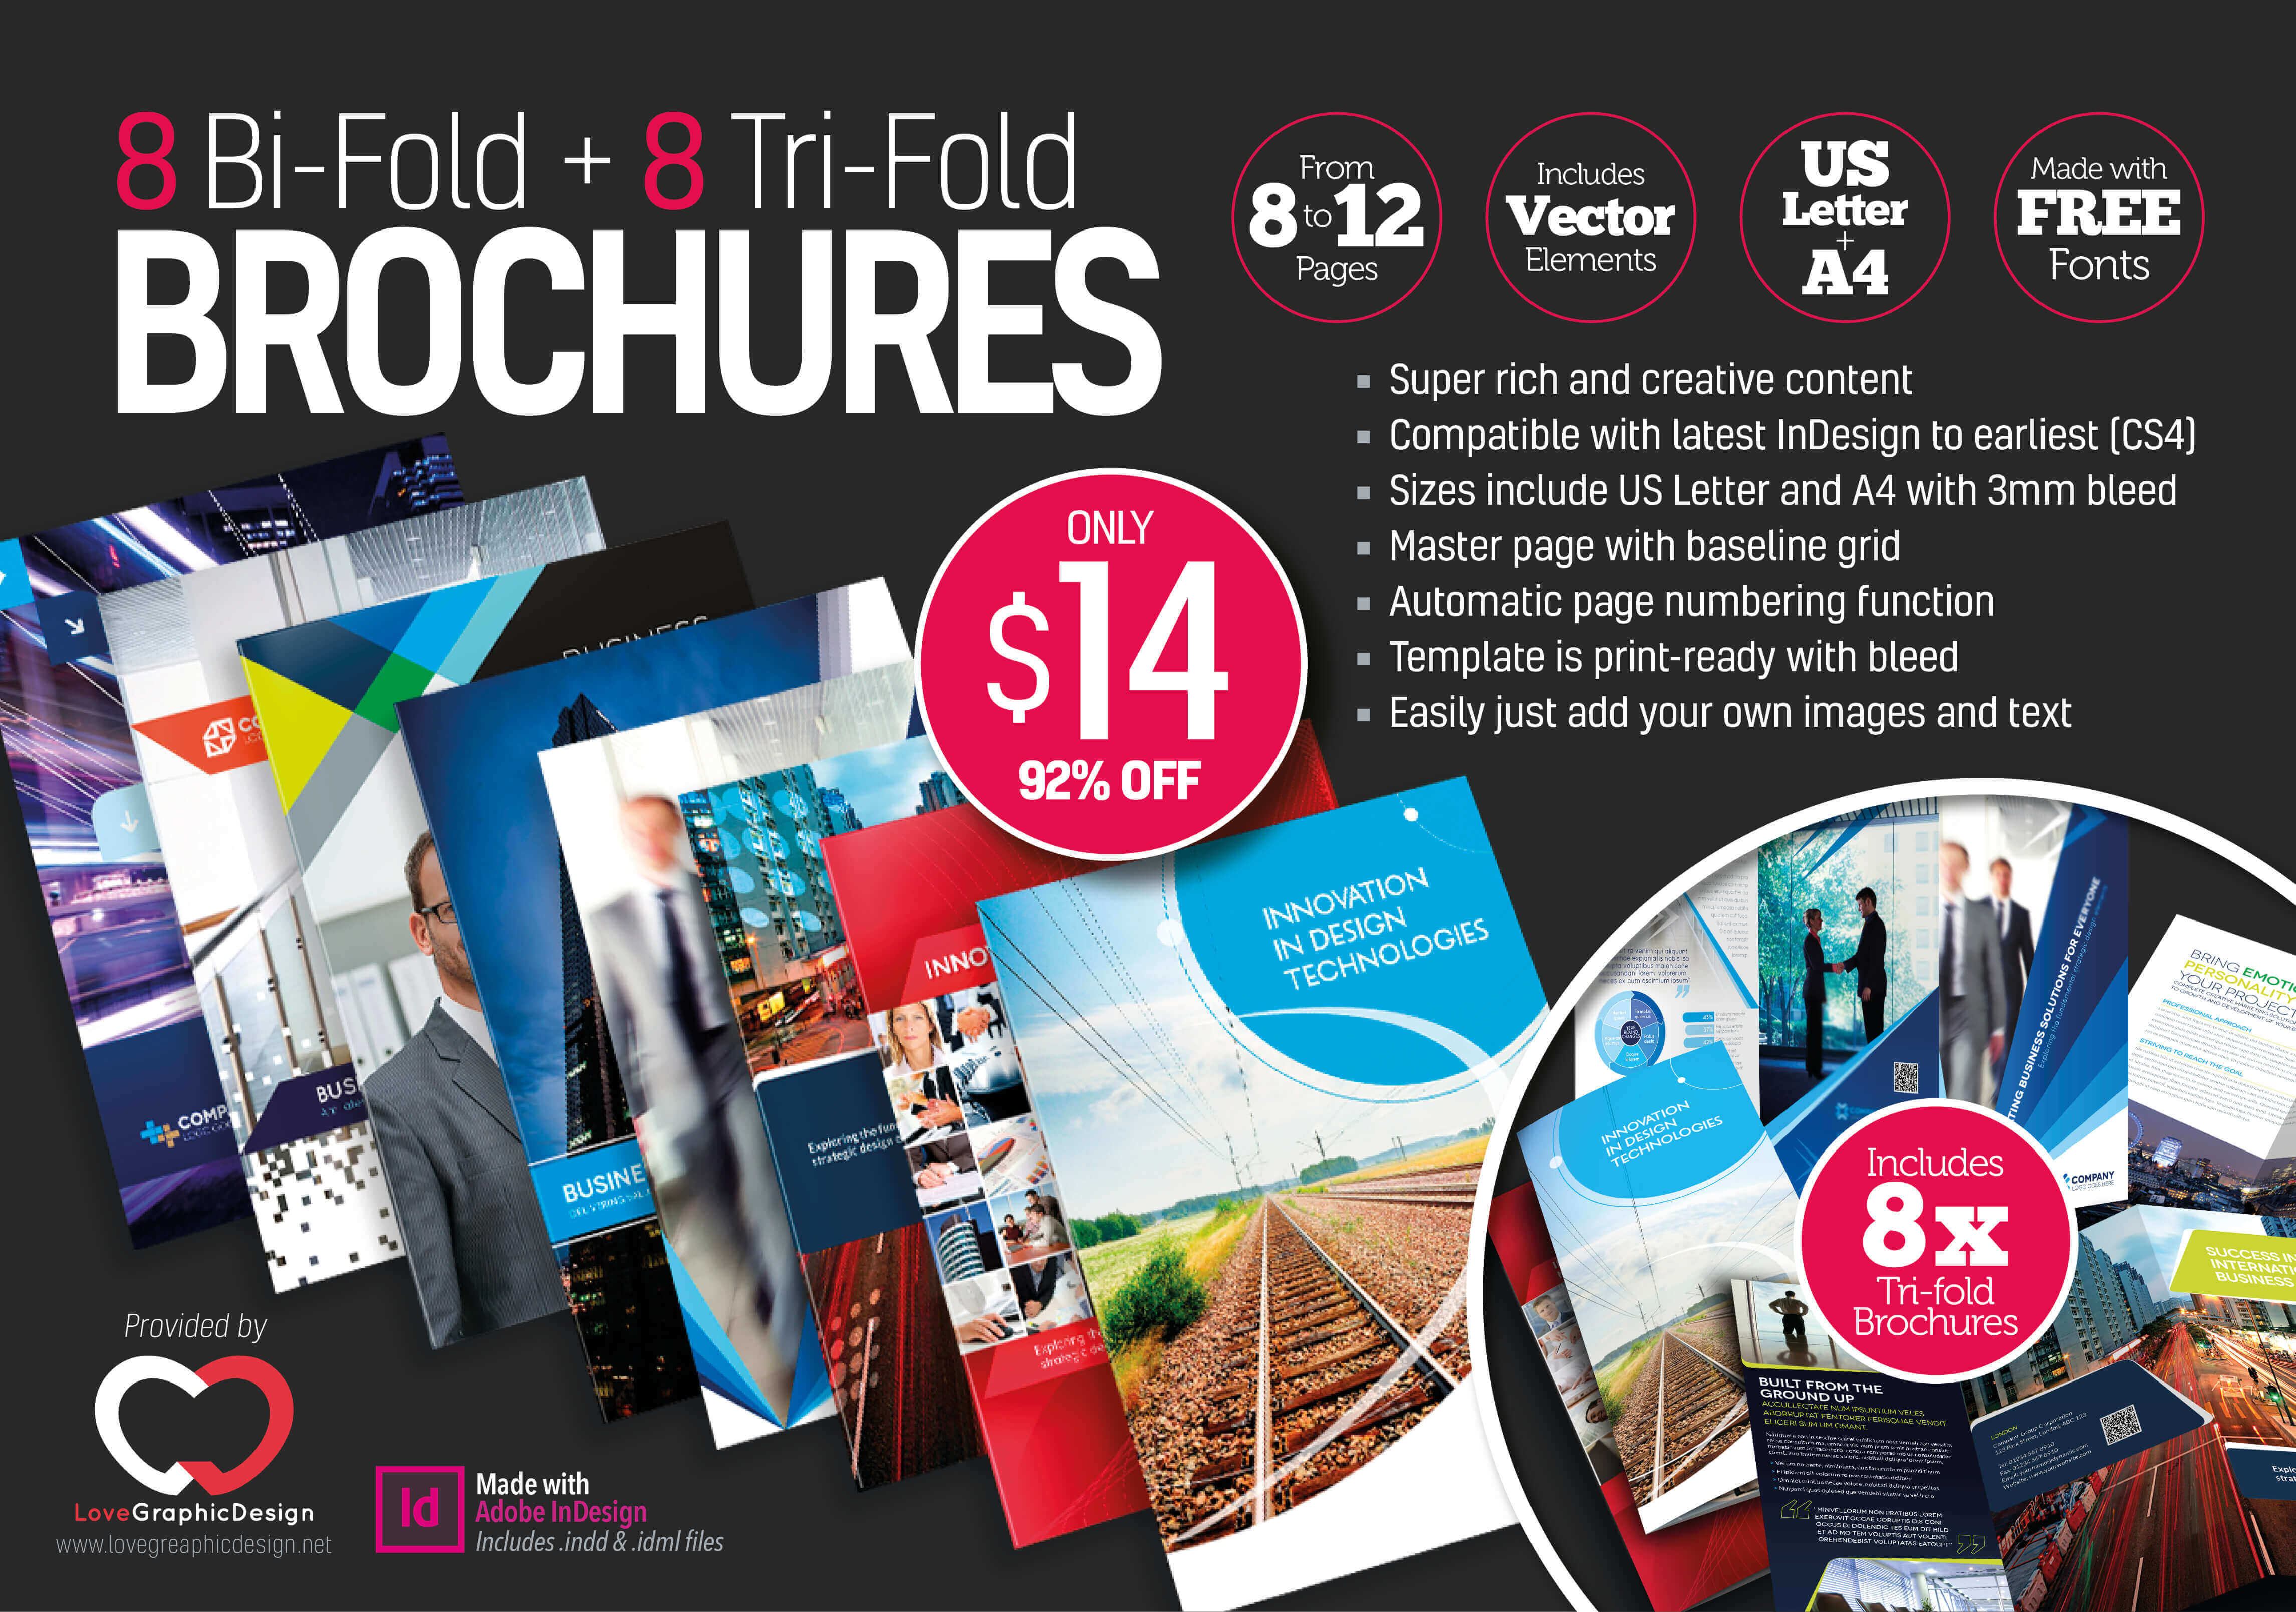 8 Print-Ready InDesign Bi-Fold & Tri-Fold Brochure Templates – only $14!